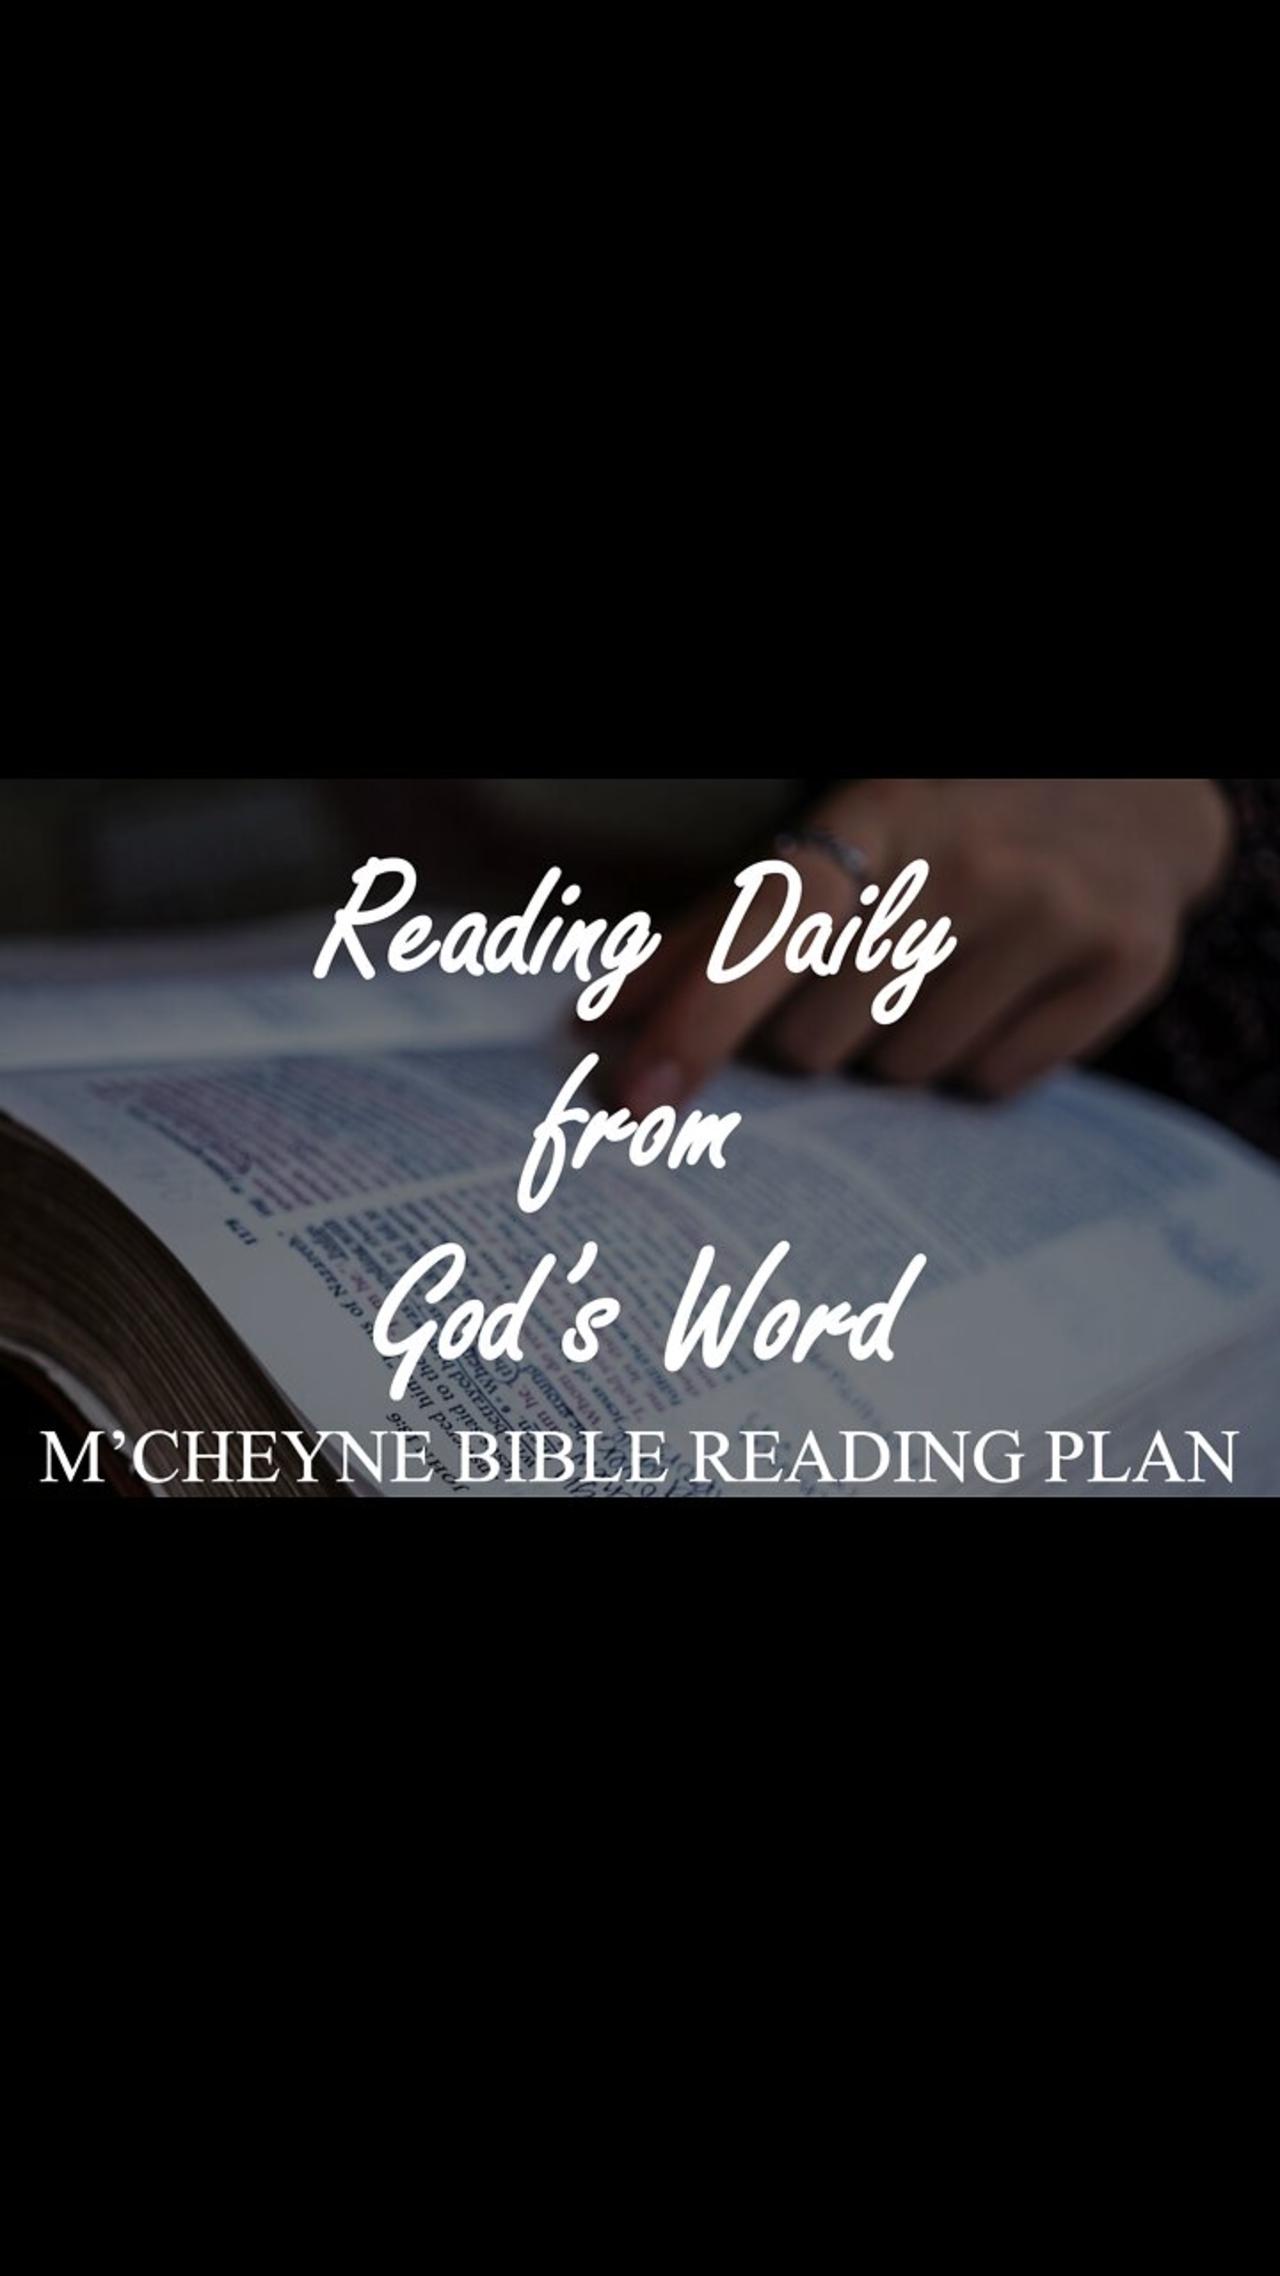 M’CHEYNE BIBLE READING PLAN - September 28